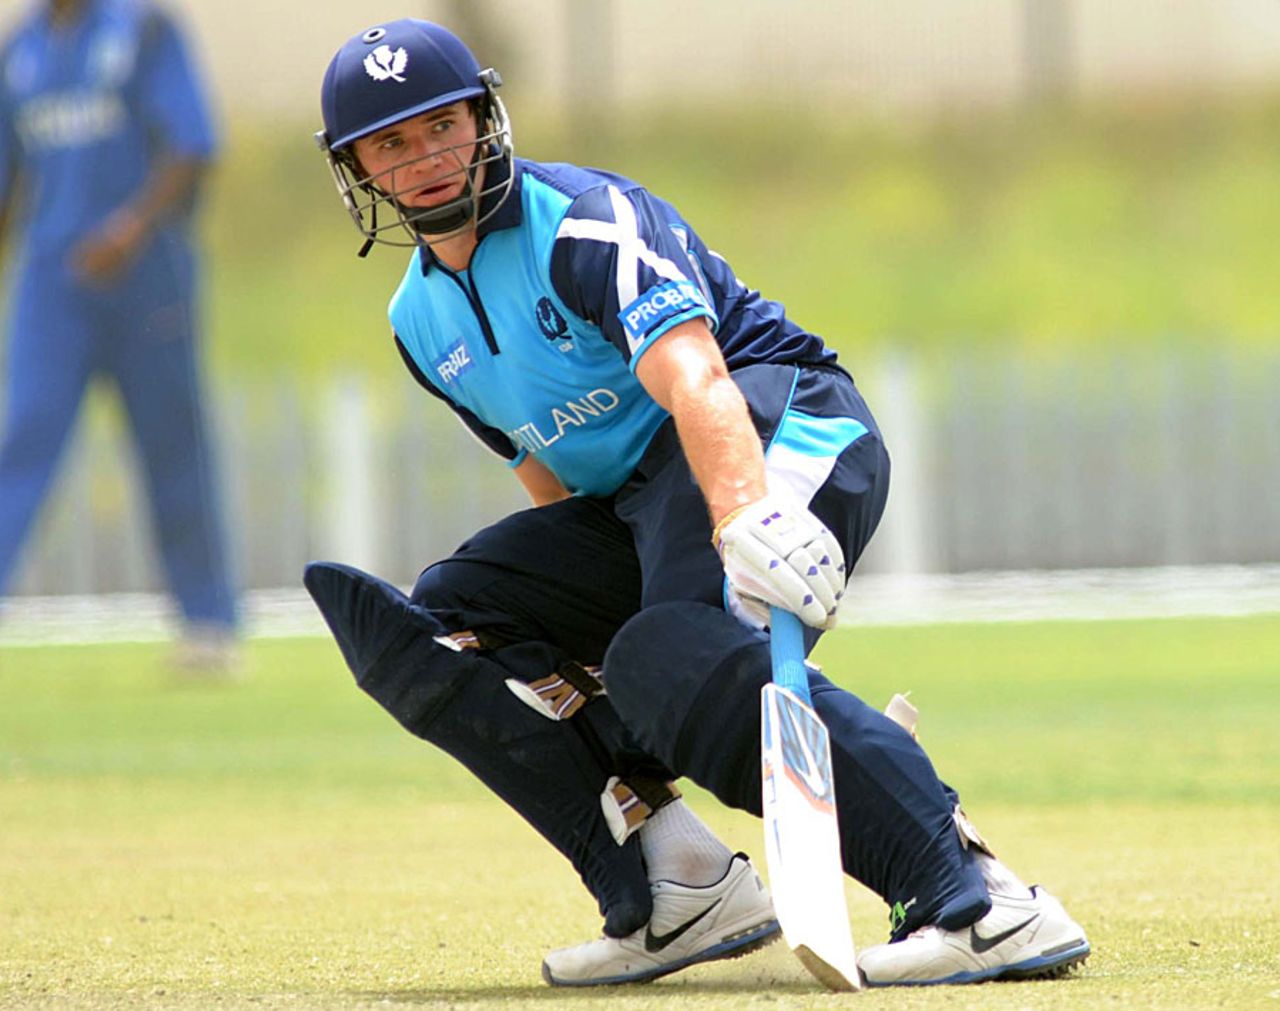 Richie Berrington scored 67 in Scotland's chase, Italy v Scotland, ICC World Twenty20 Qualifier, Dubai, March 19, 2012